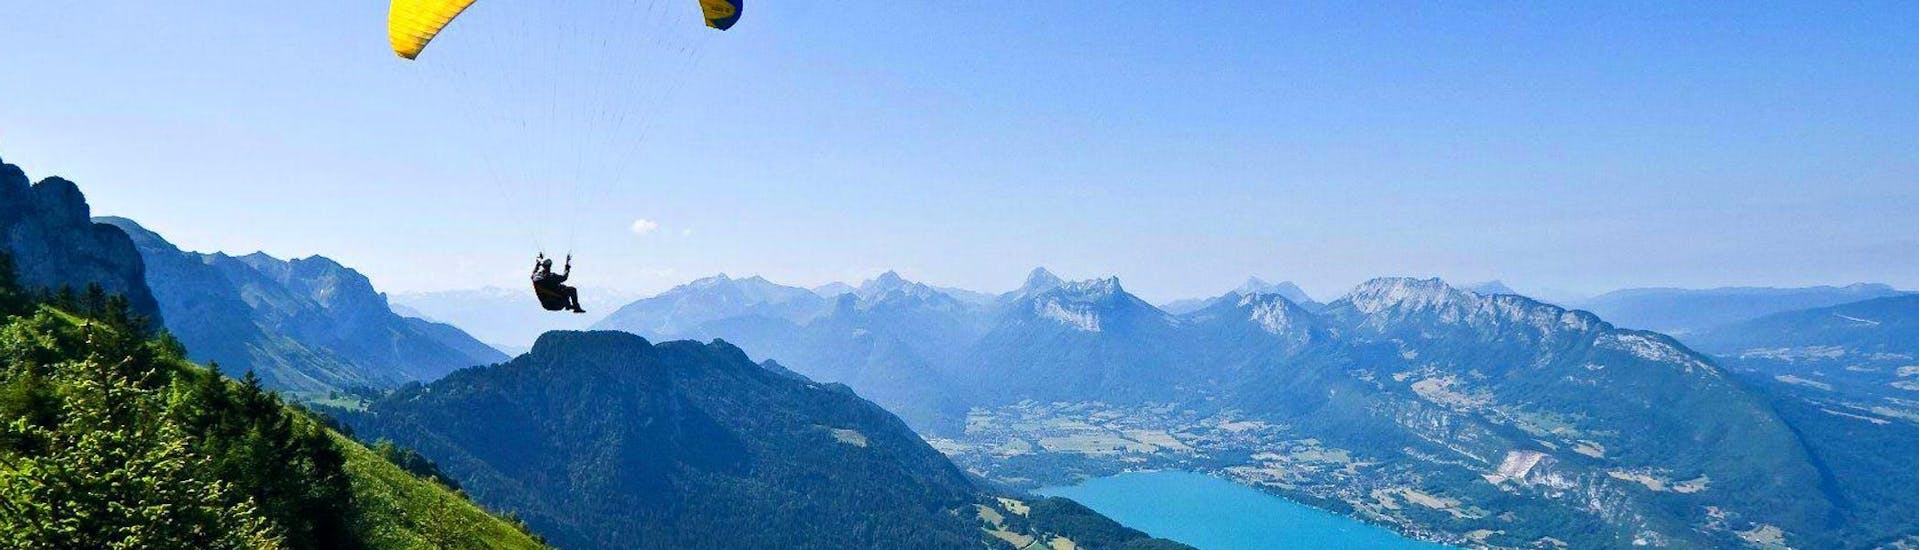 Acrobatisch tandemparagliden in Doussard (vanaf 16 j.) - Forclaz Pass.